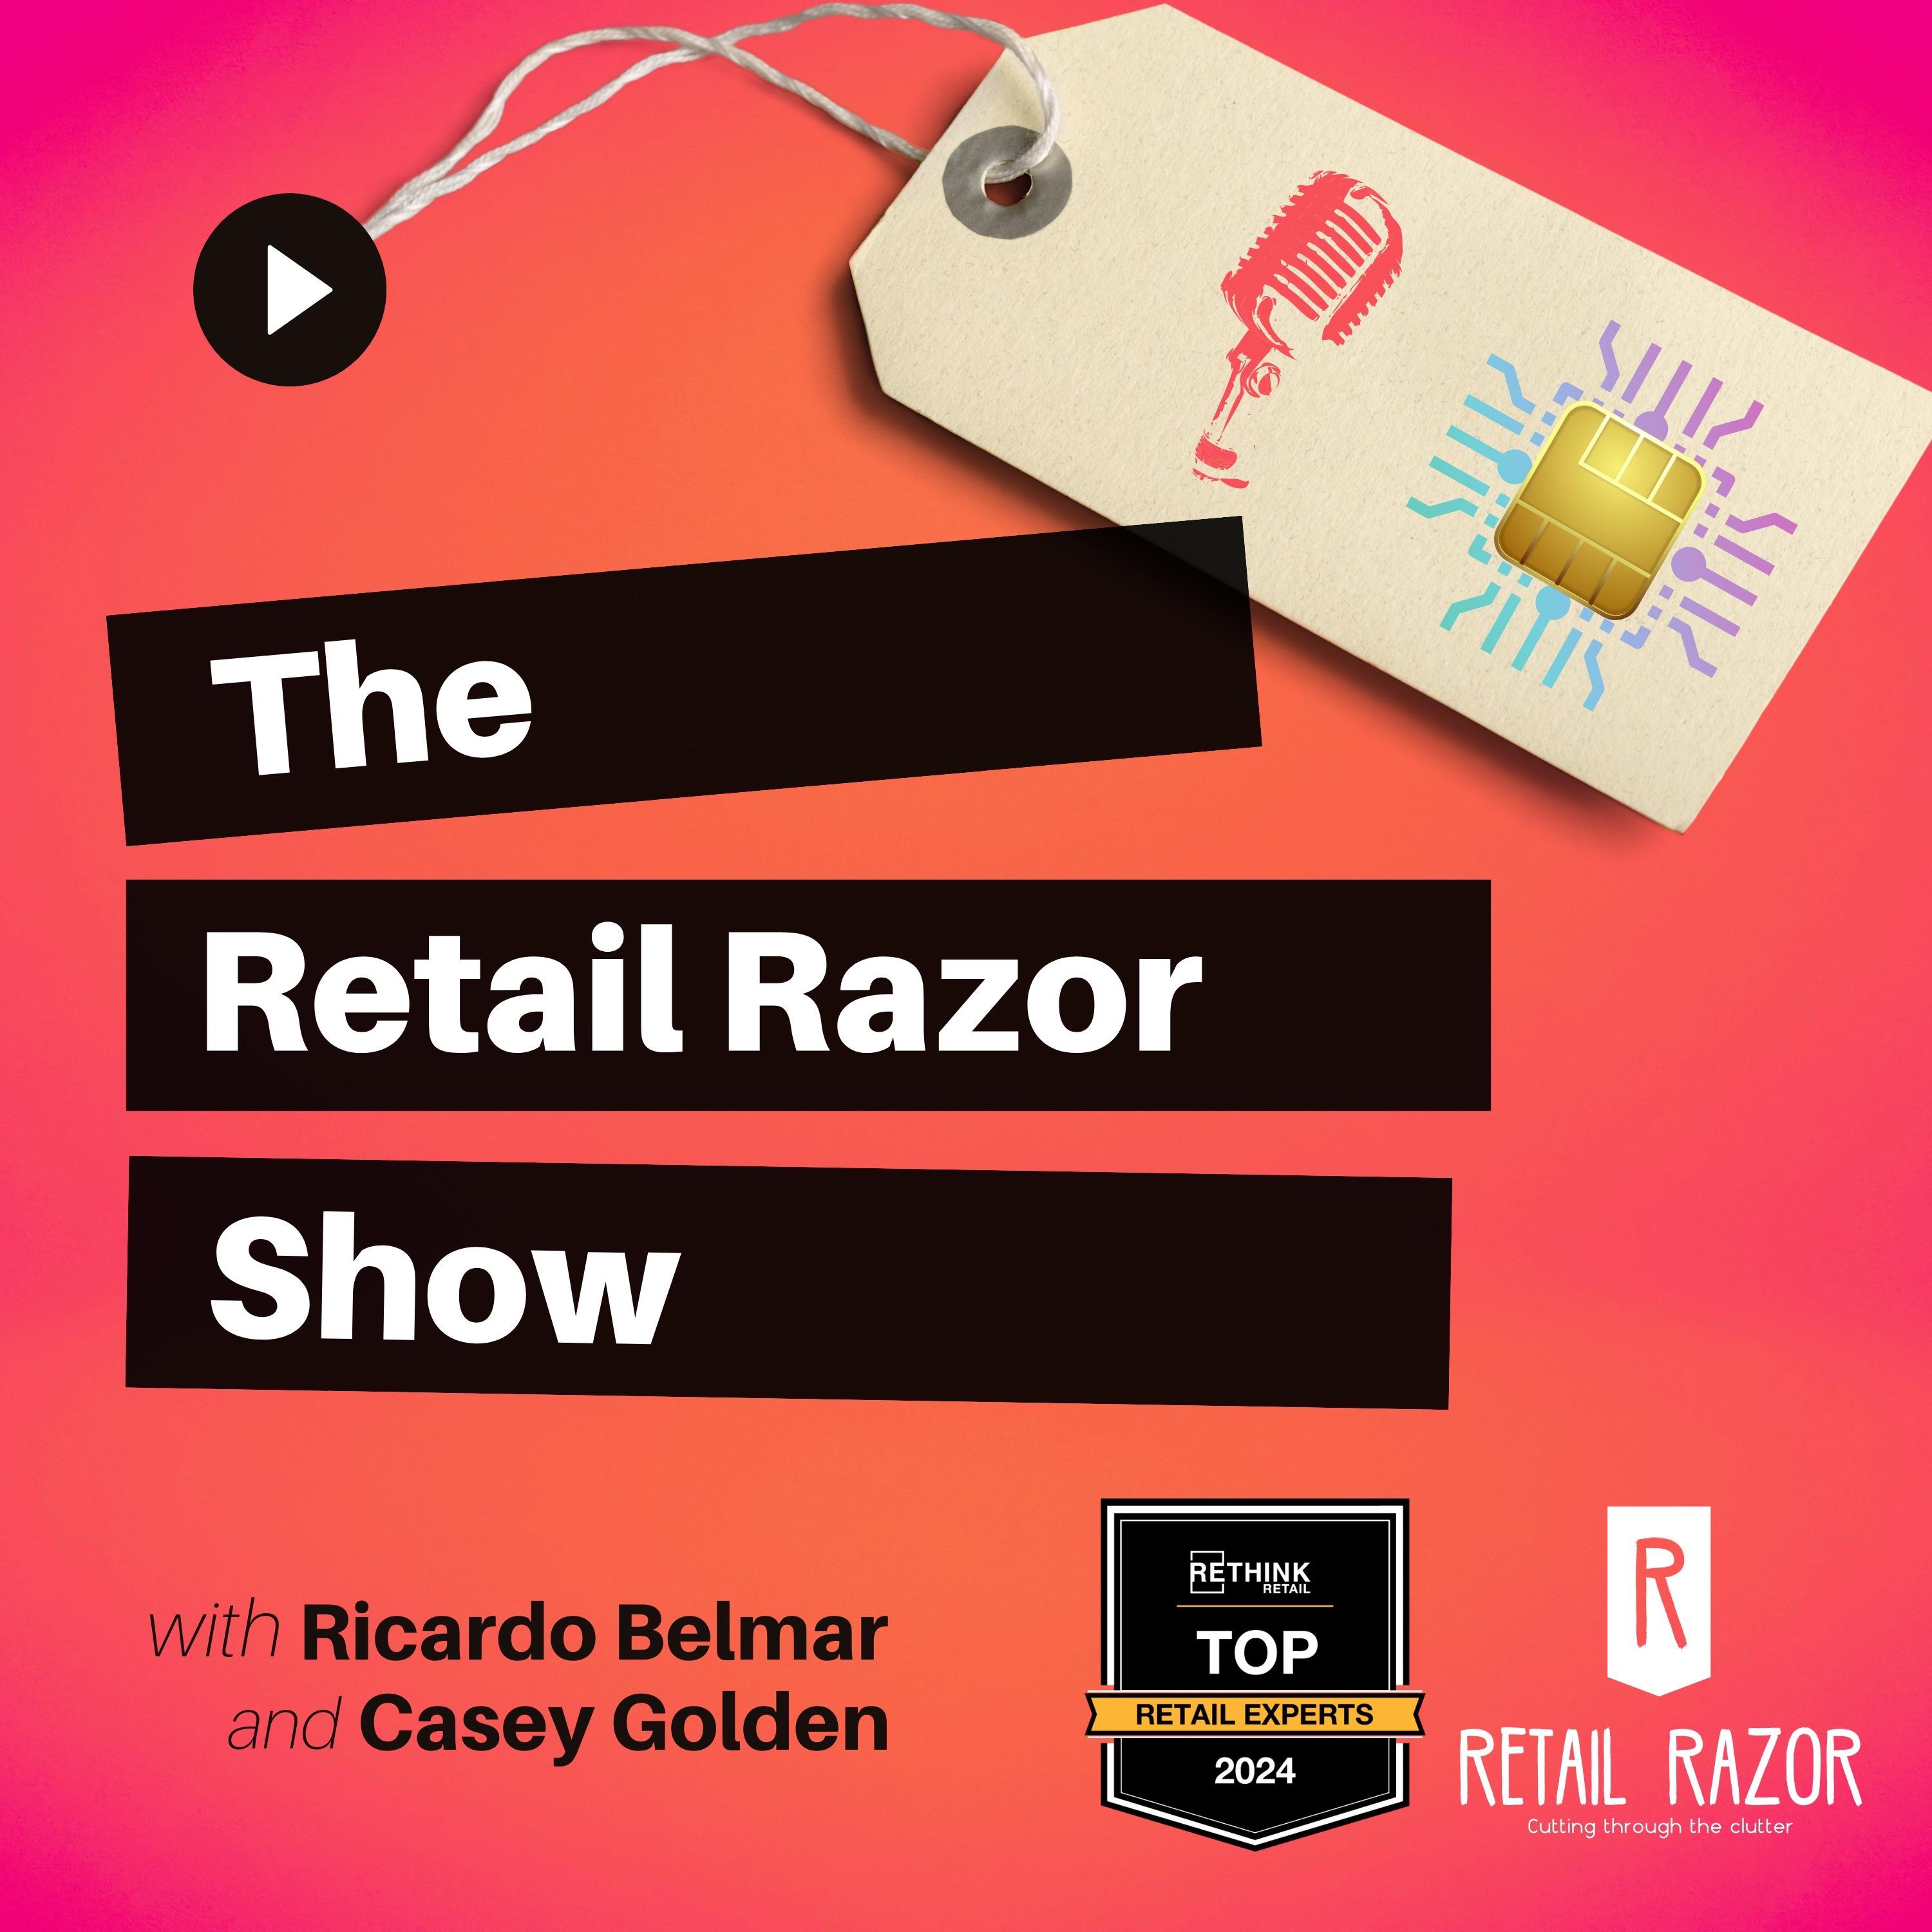 The Retail Razor Show